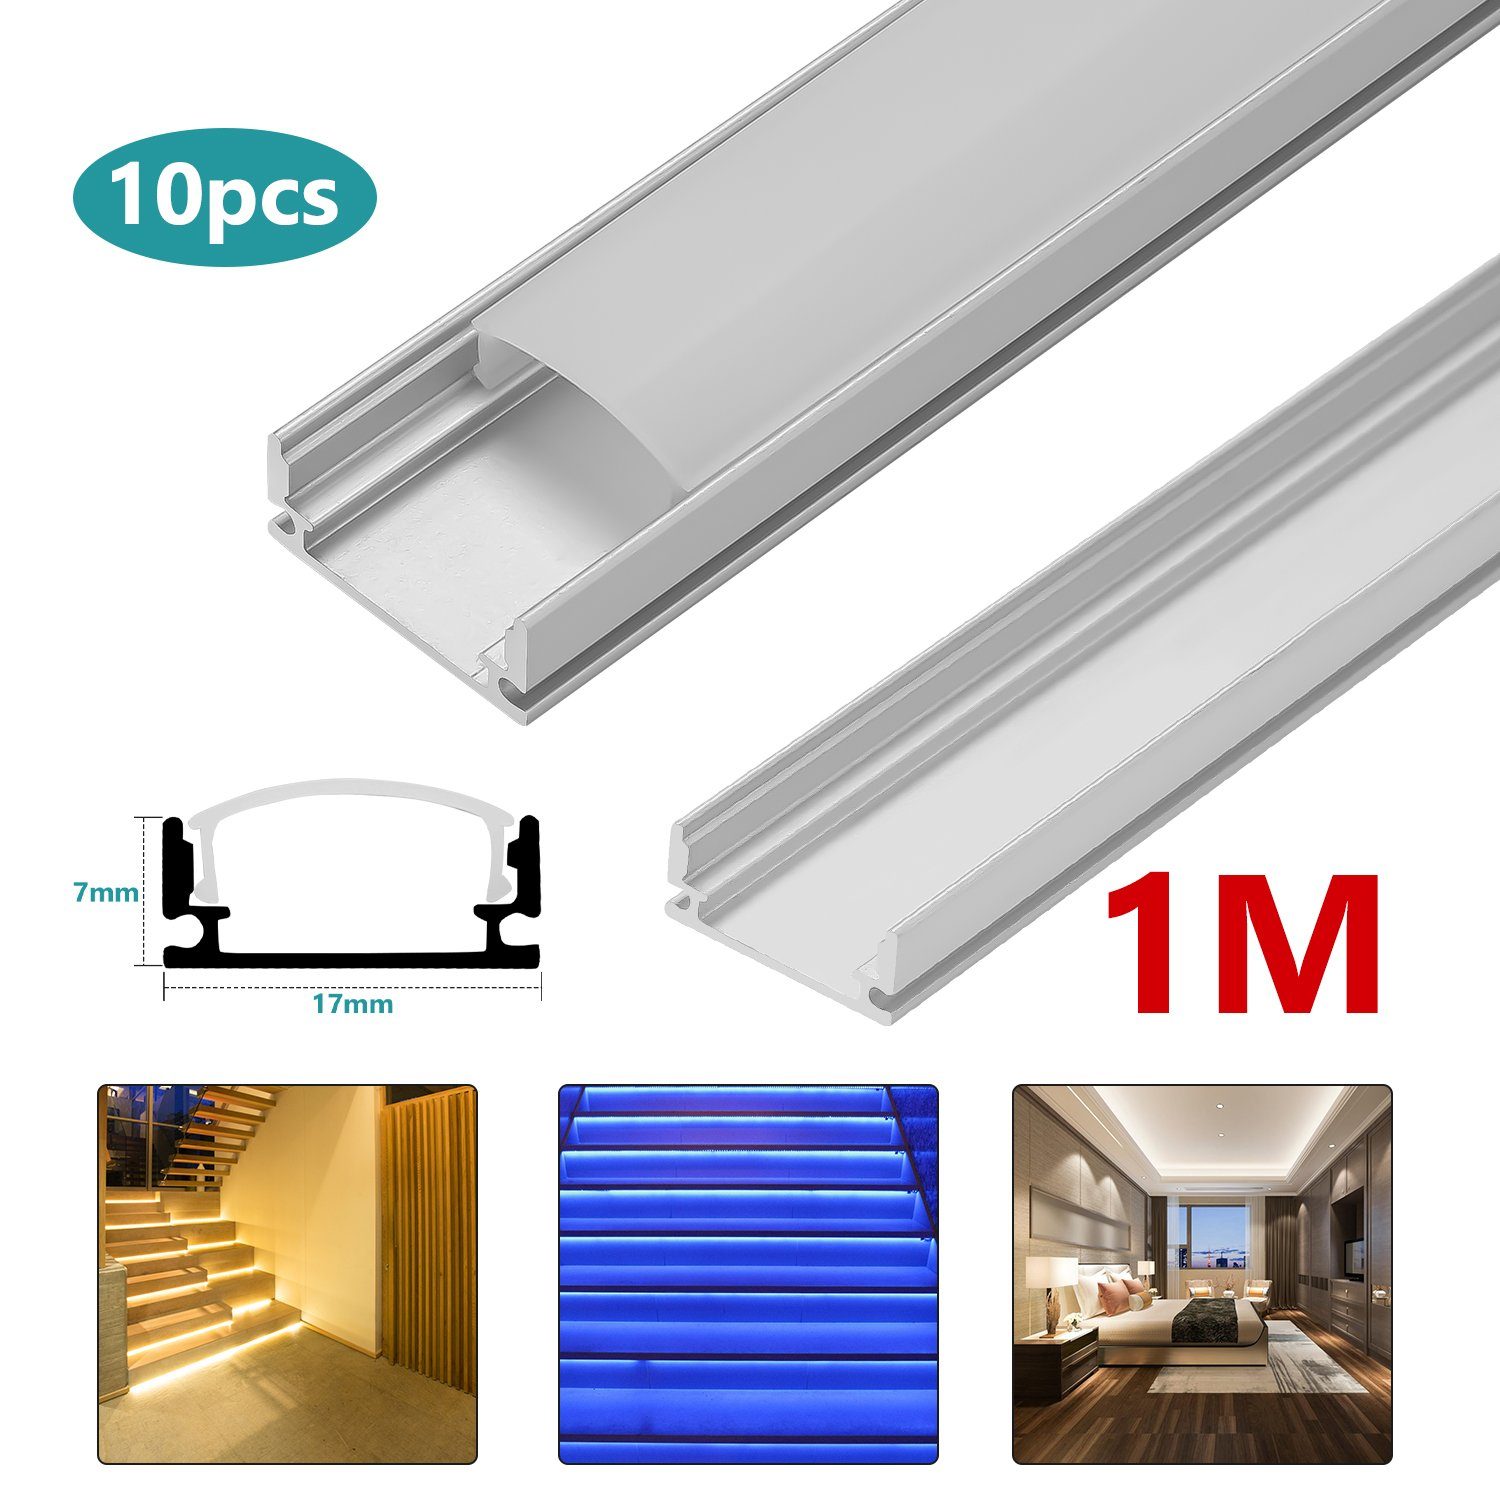 Gimisgu LED-Stripe-Profil LED 10x1M Schiene Profile Streifen Alu Leuchte Profil Leiste Aluminium